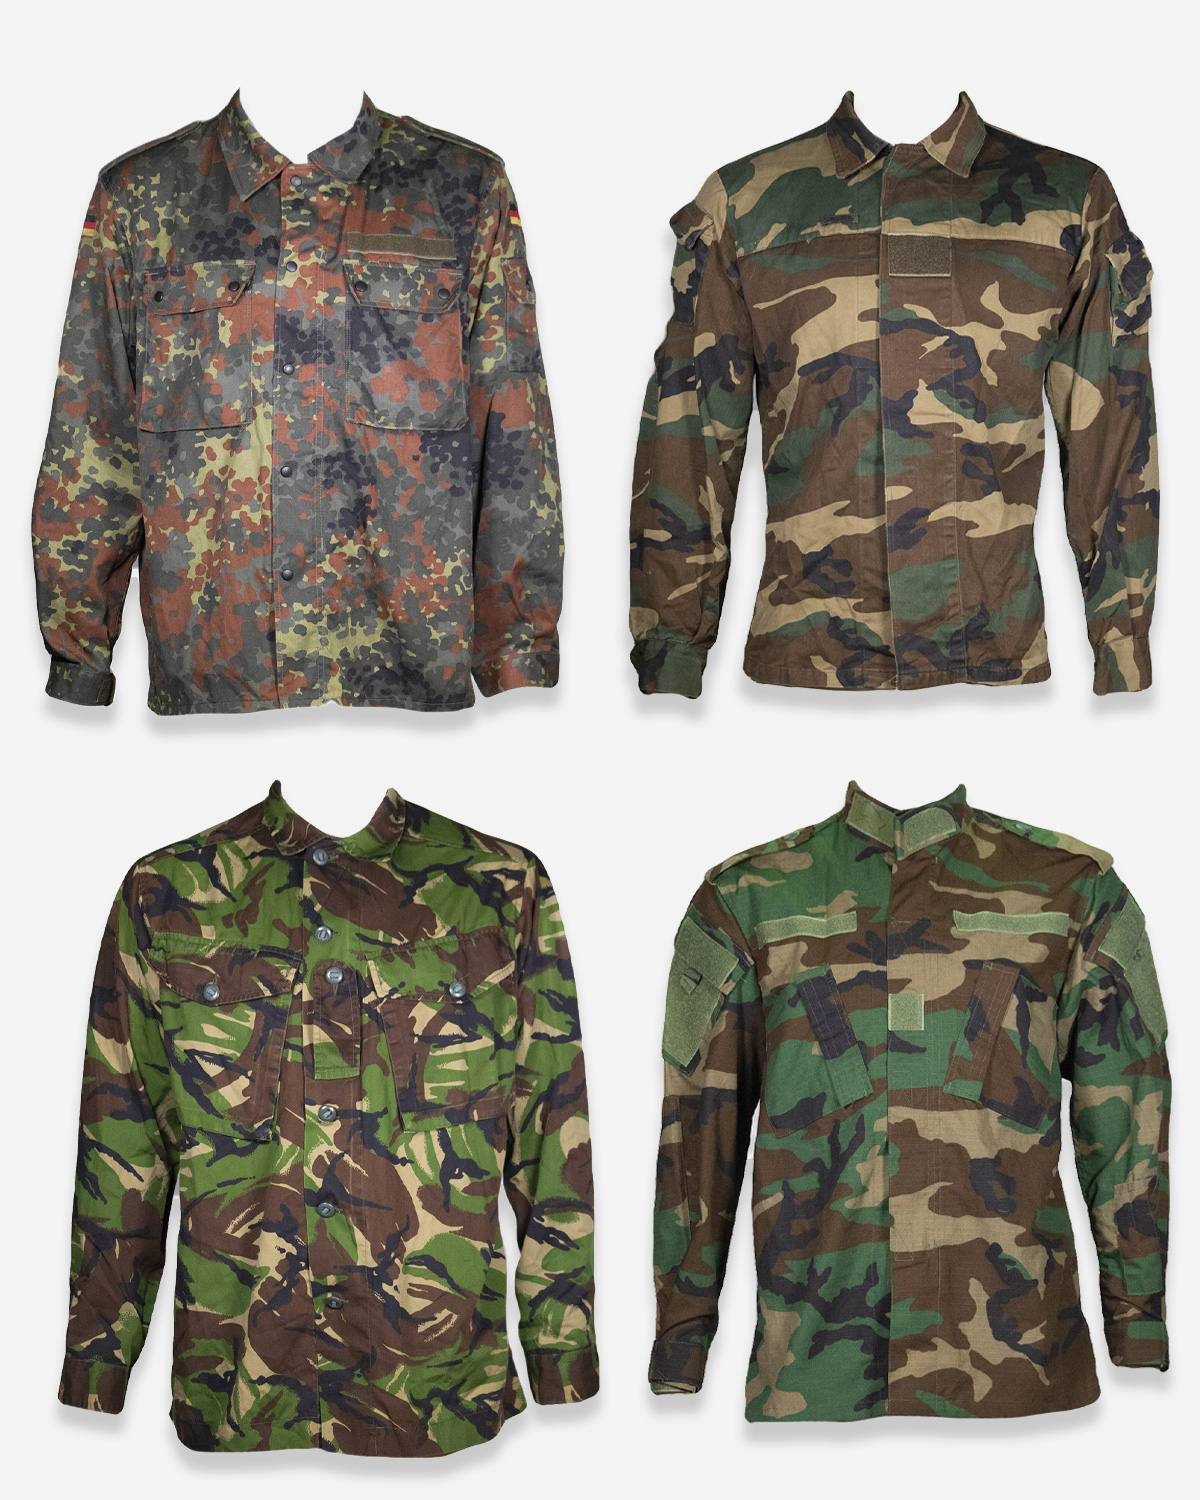 Box quattro camicie militari camouflage